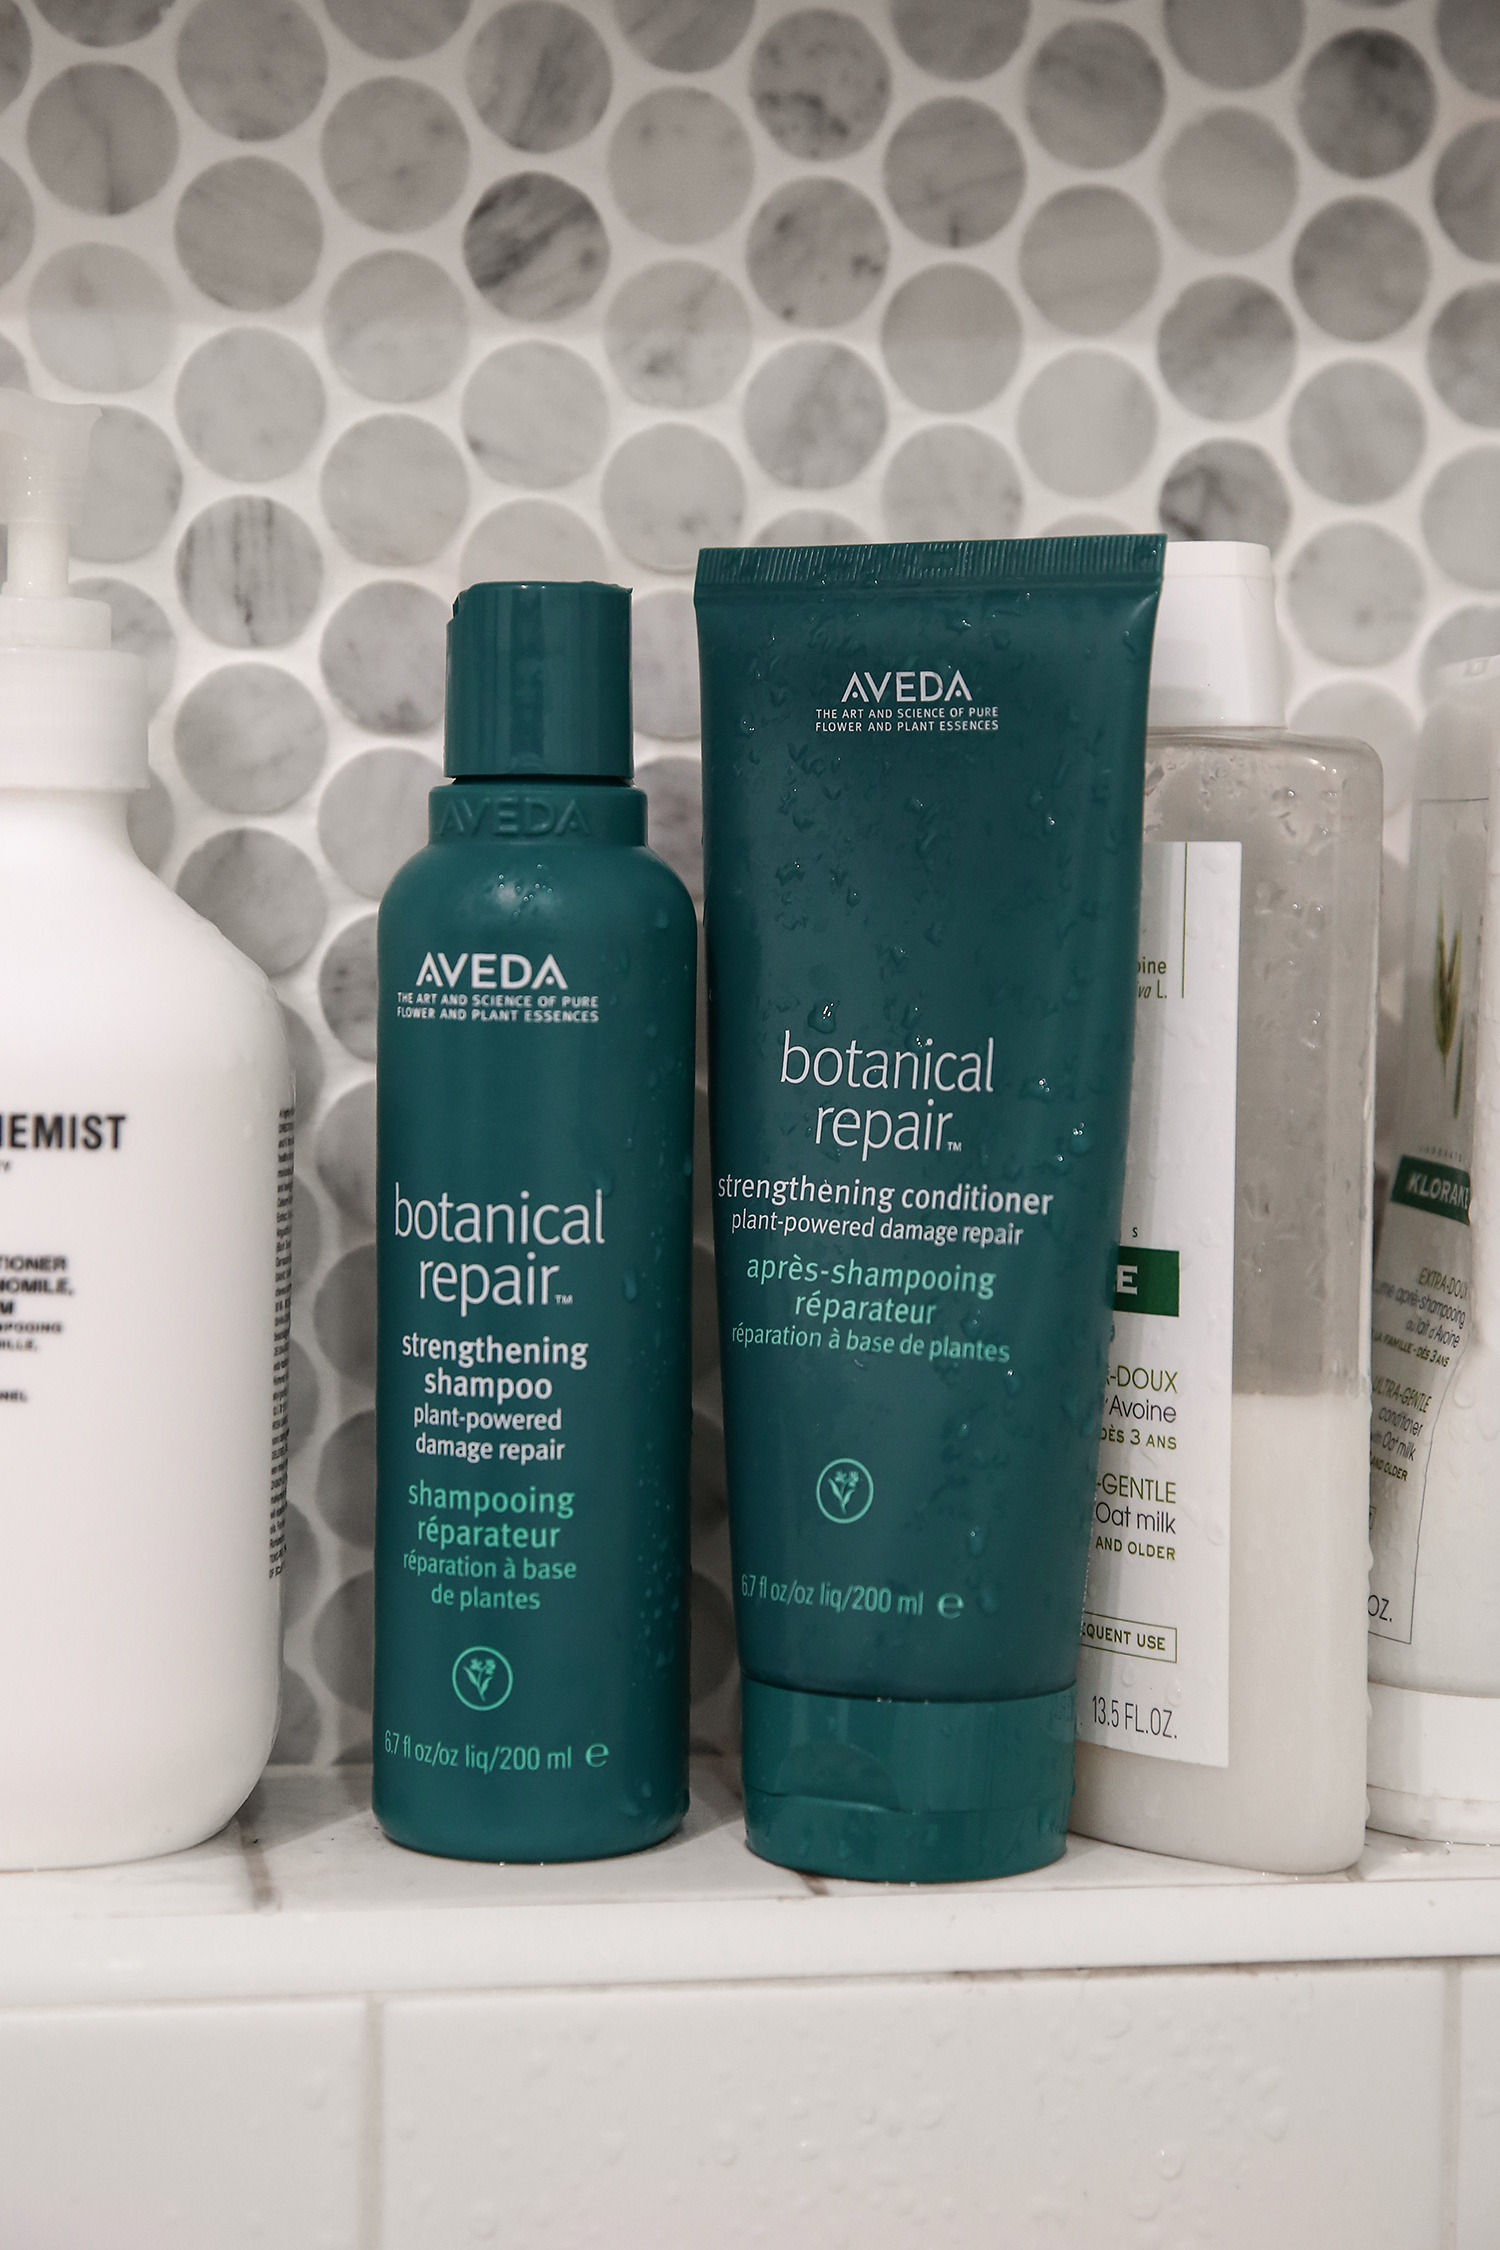 Aveda Botanical Repair Shampoo and Conditioner Review